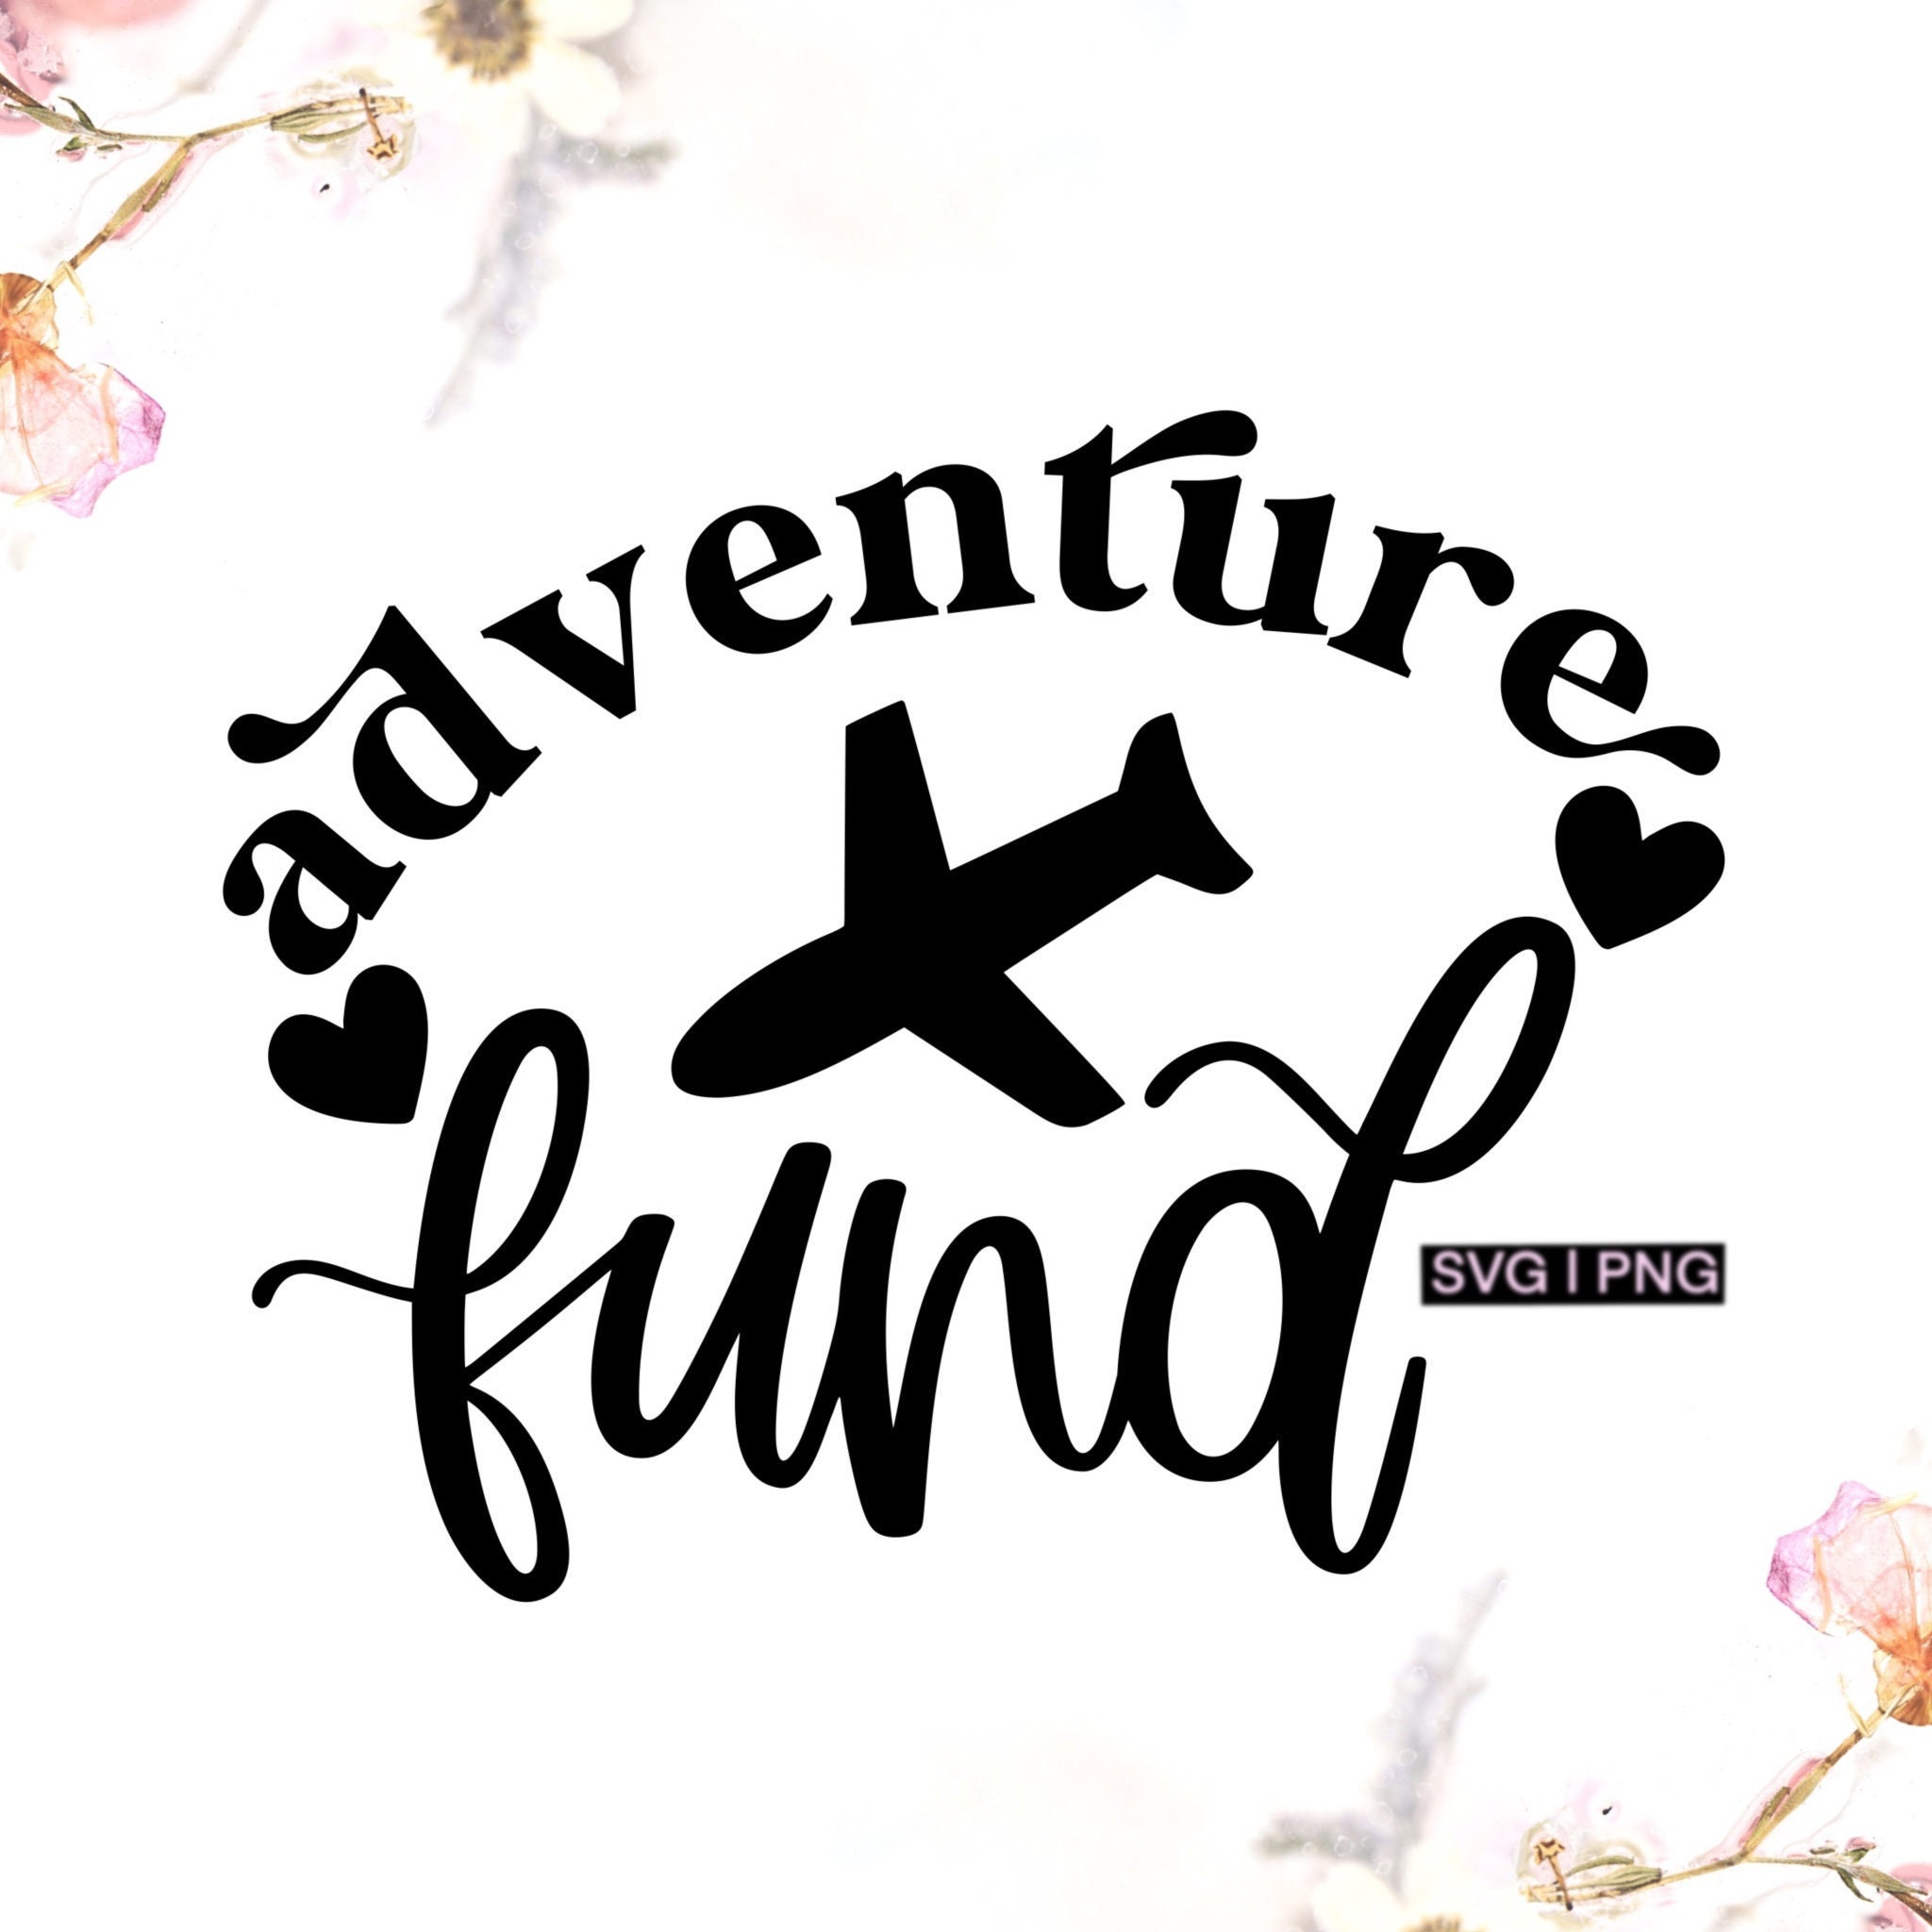 Adventure Fund Bank Plaque